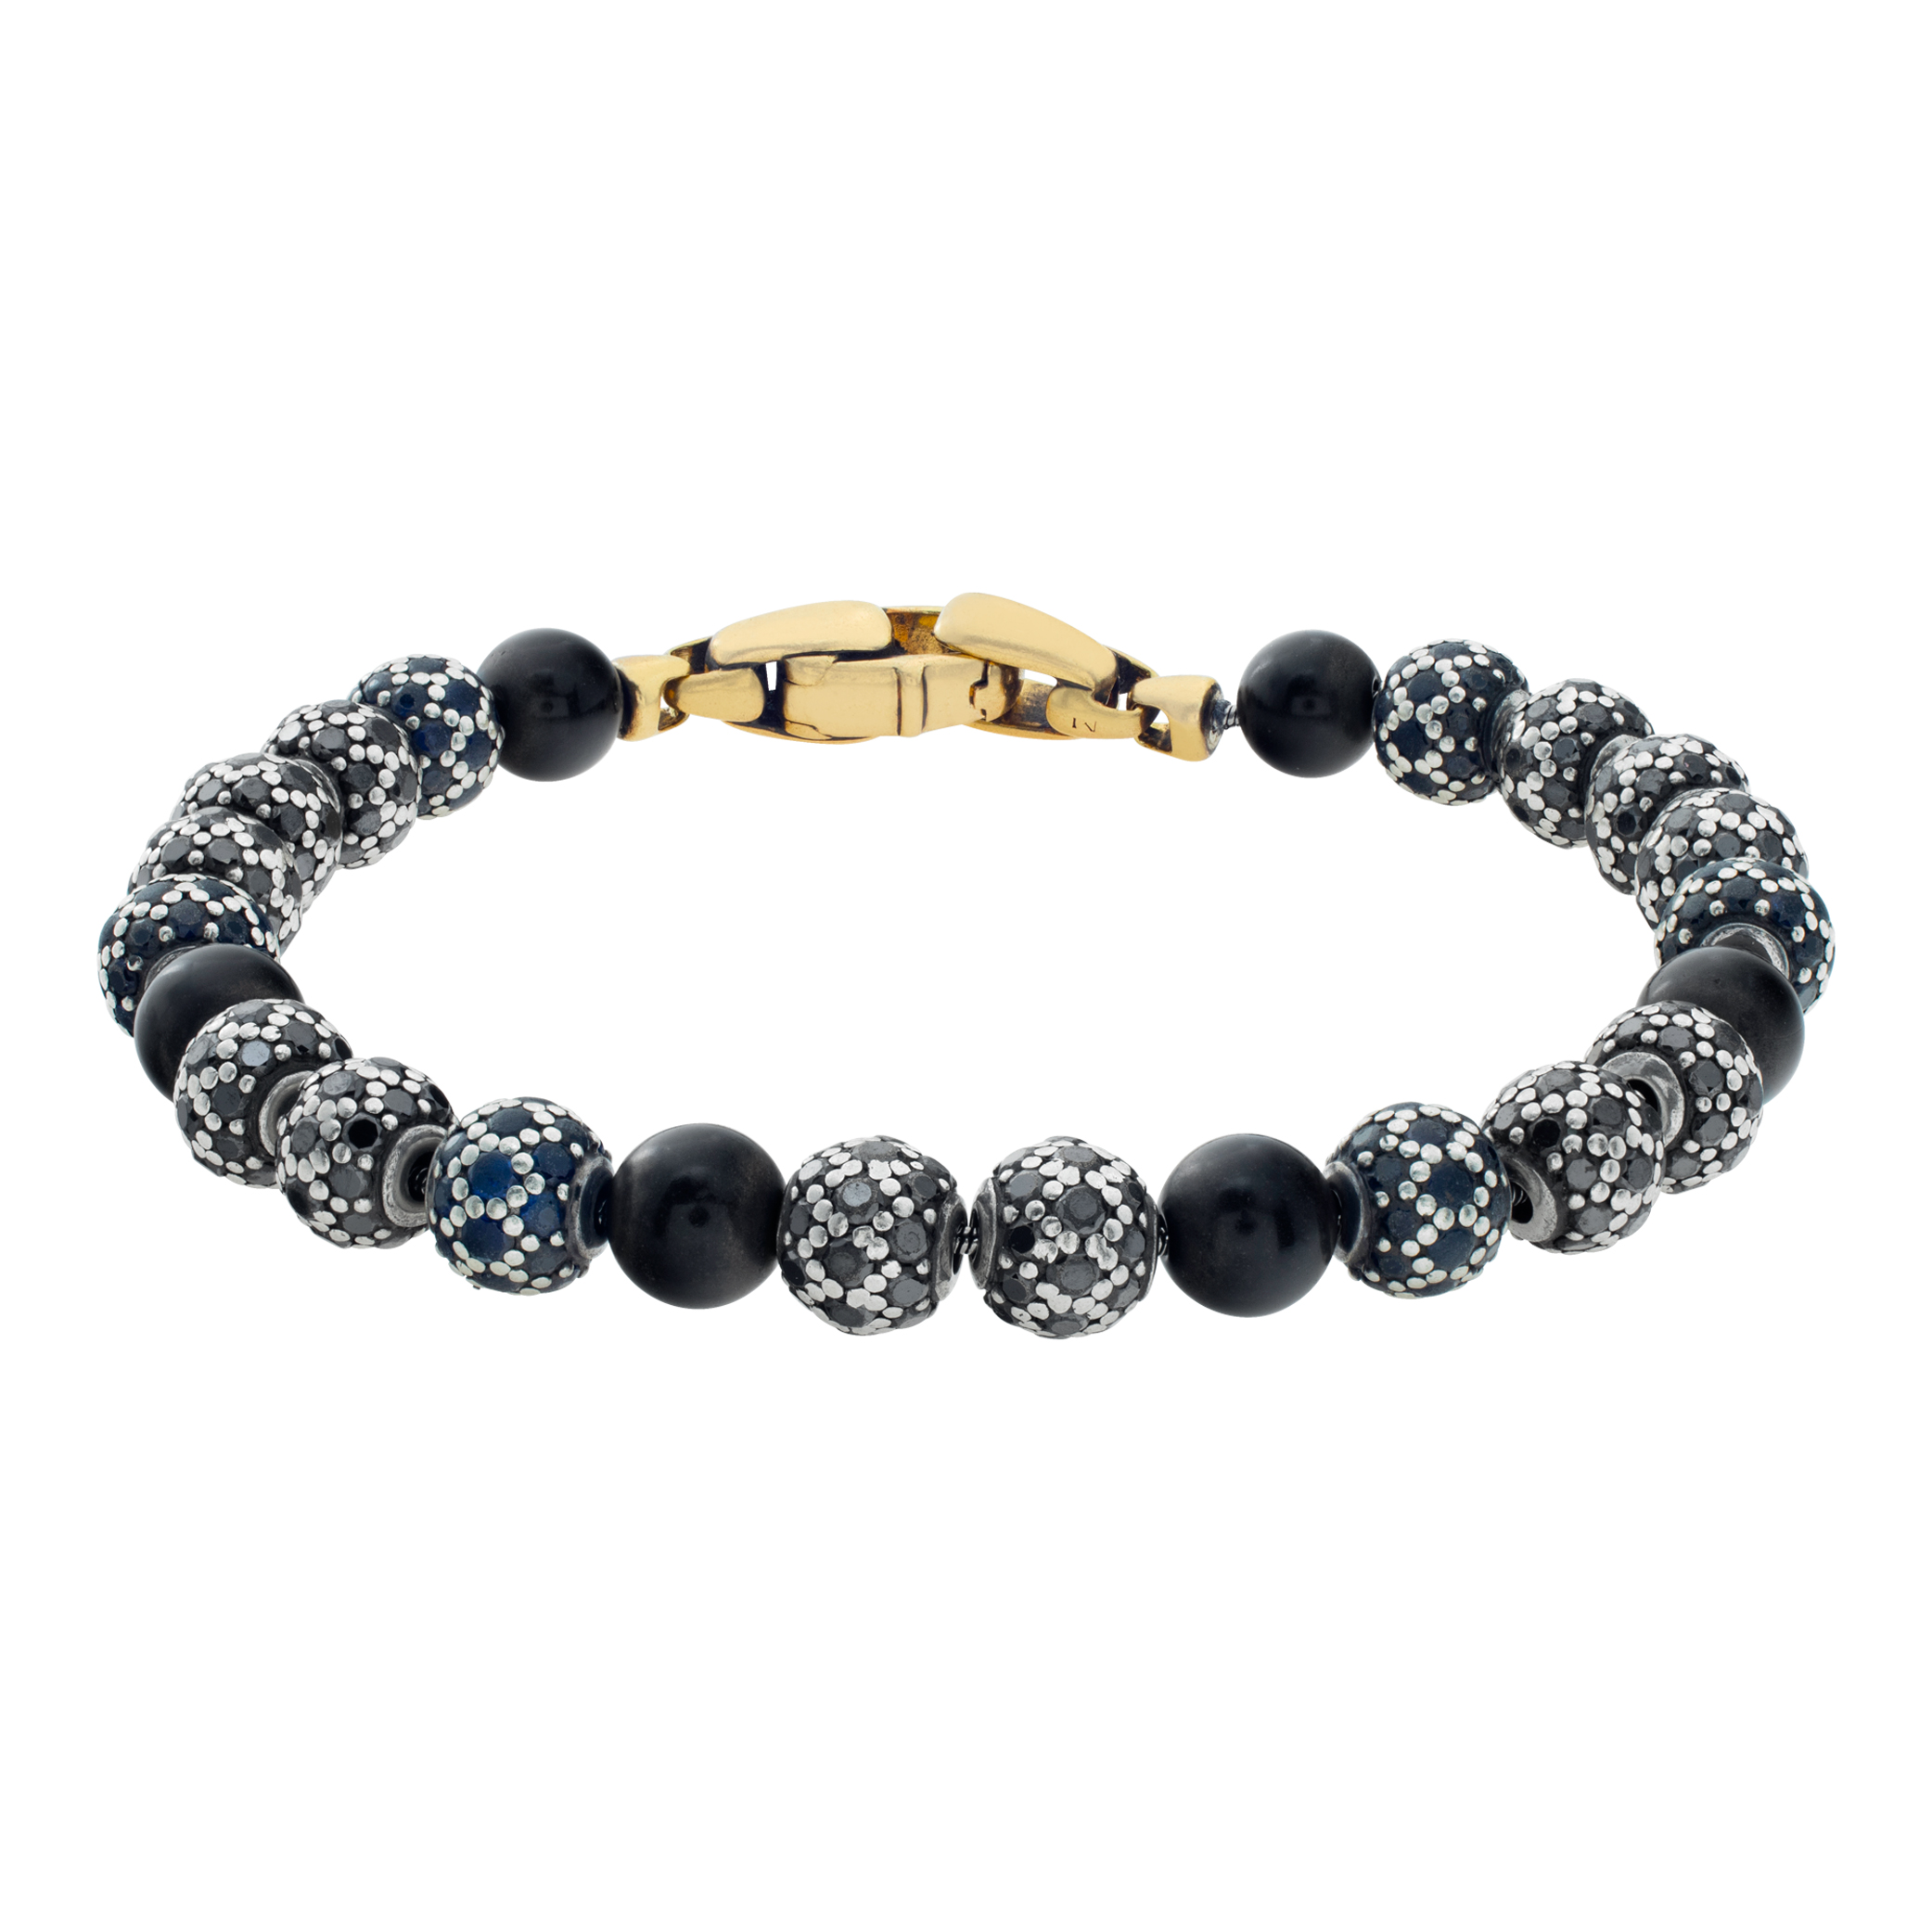 David Yurman Spiritual Bead bracelet with black onyx, blue sapphires and black diamonds in 18k